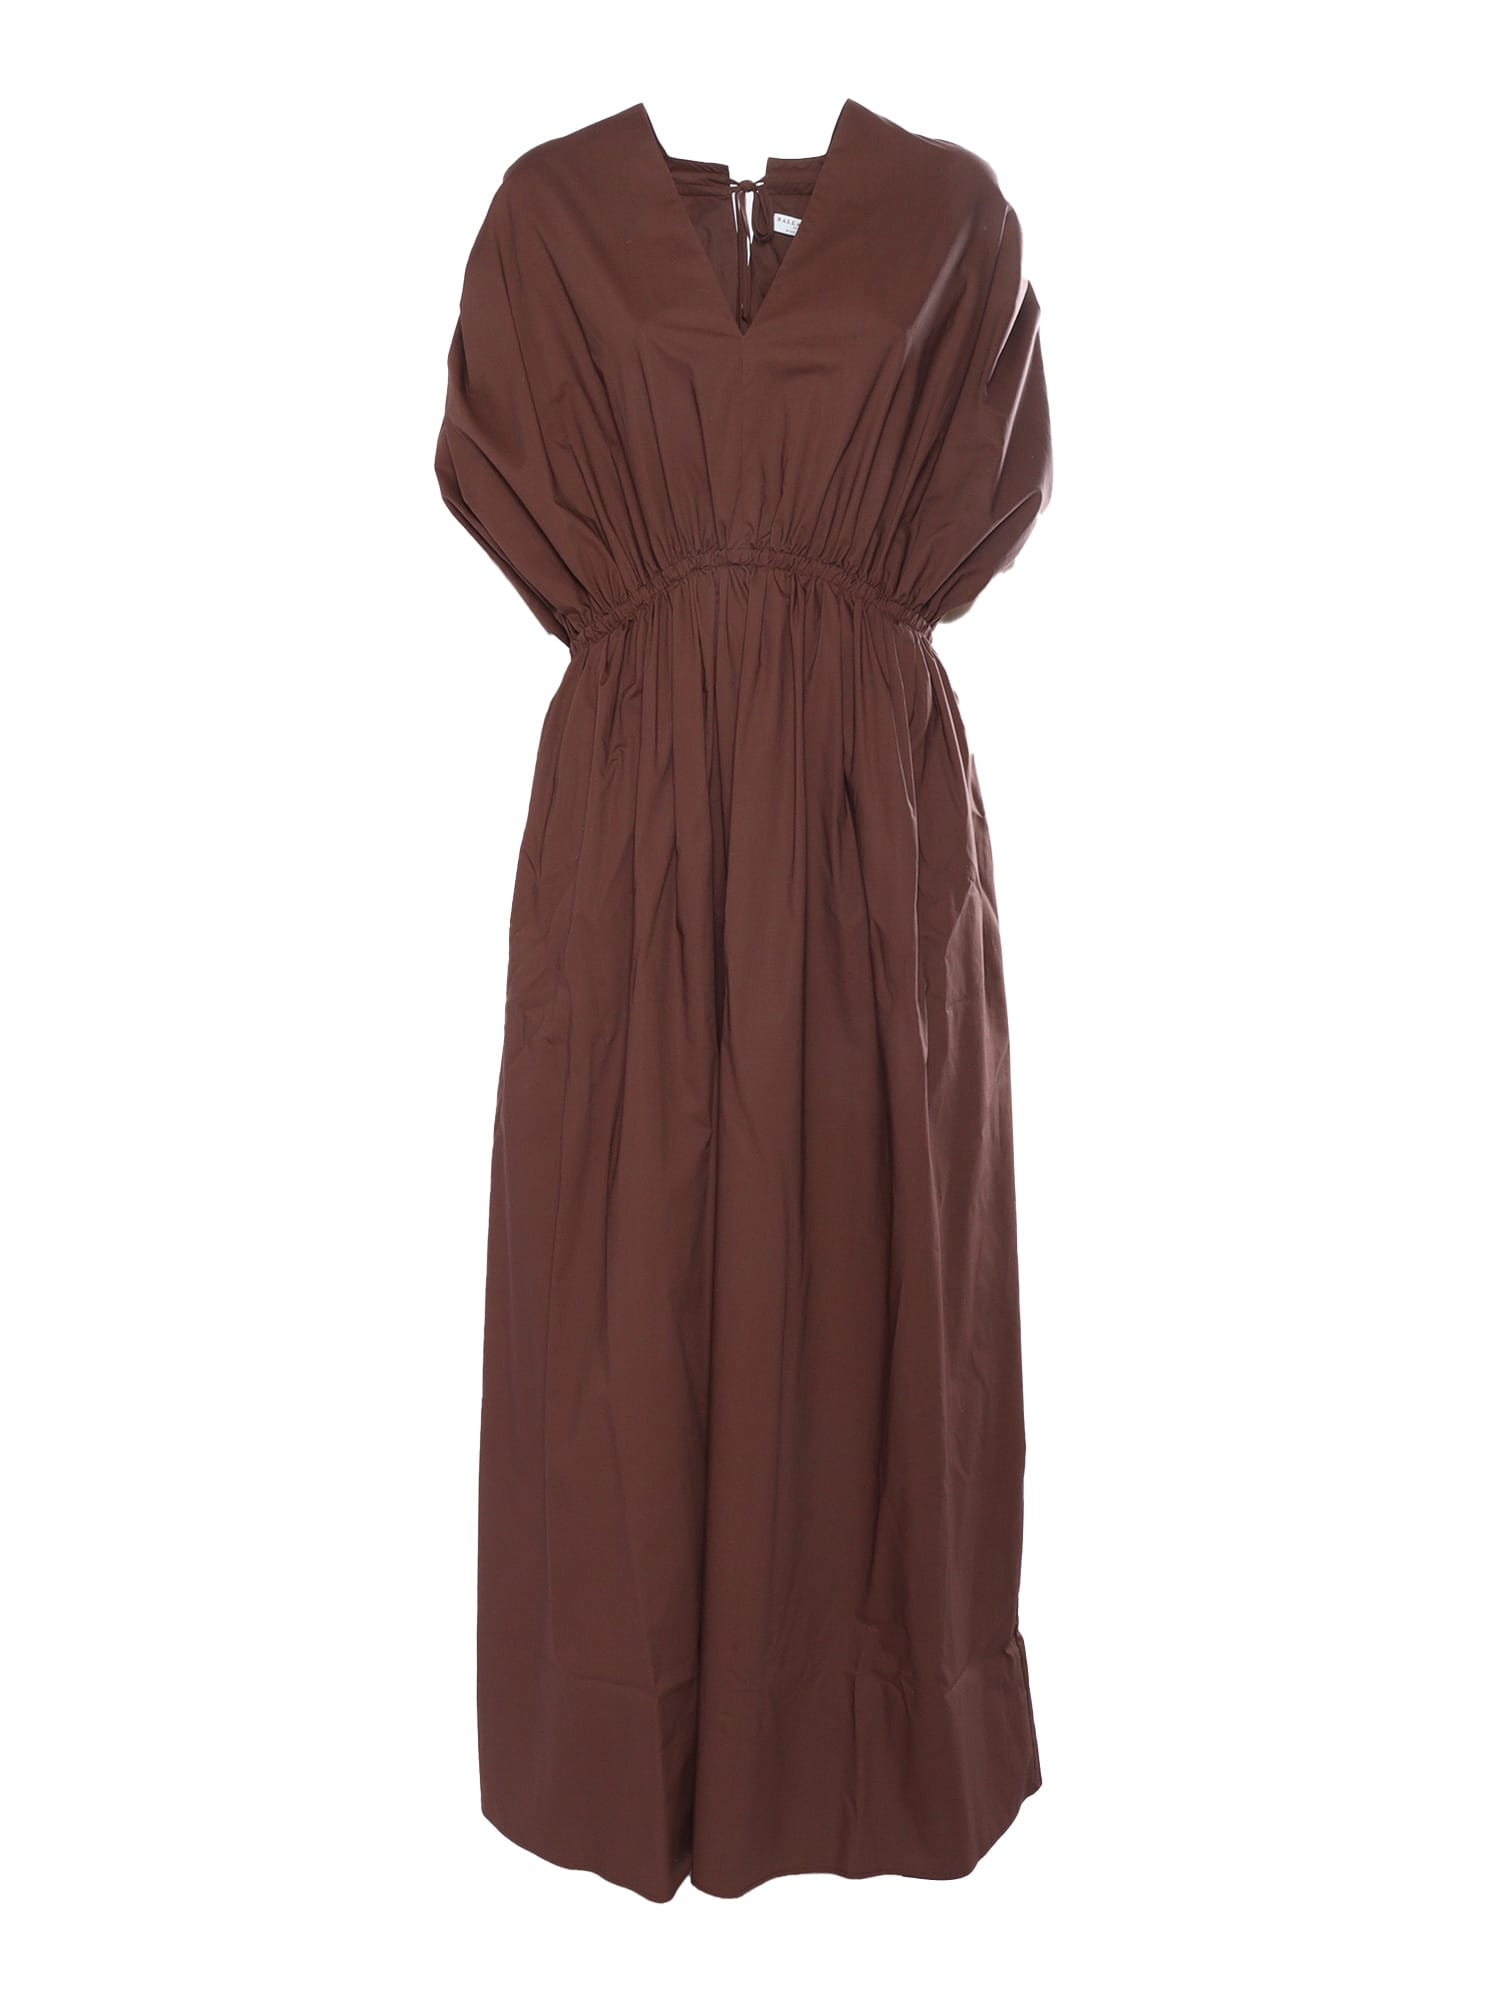 Long Brown Dress